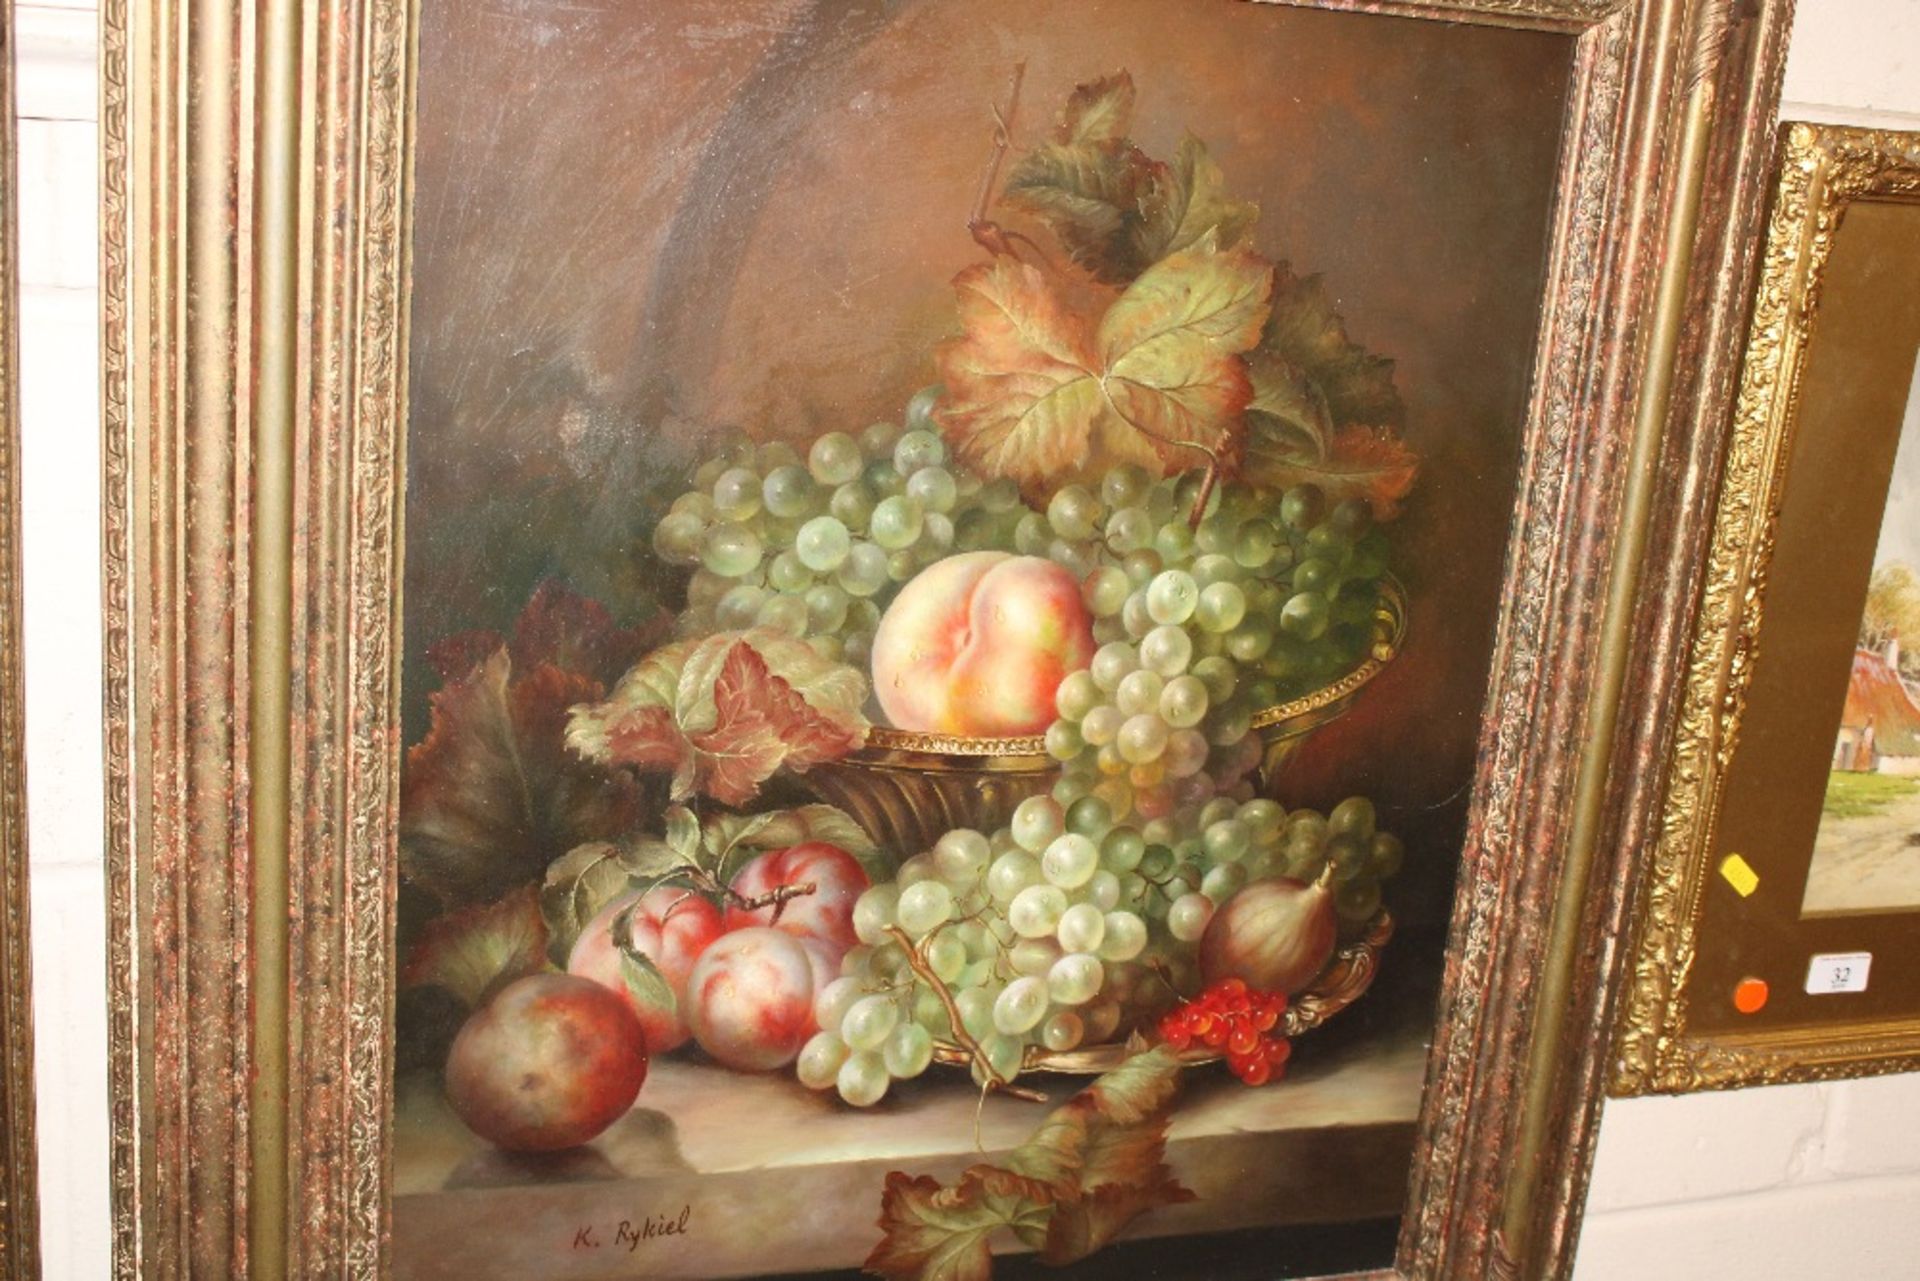 K Rykiel, Dutch still life study of fruit on a led - Image 2 of 6